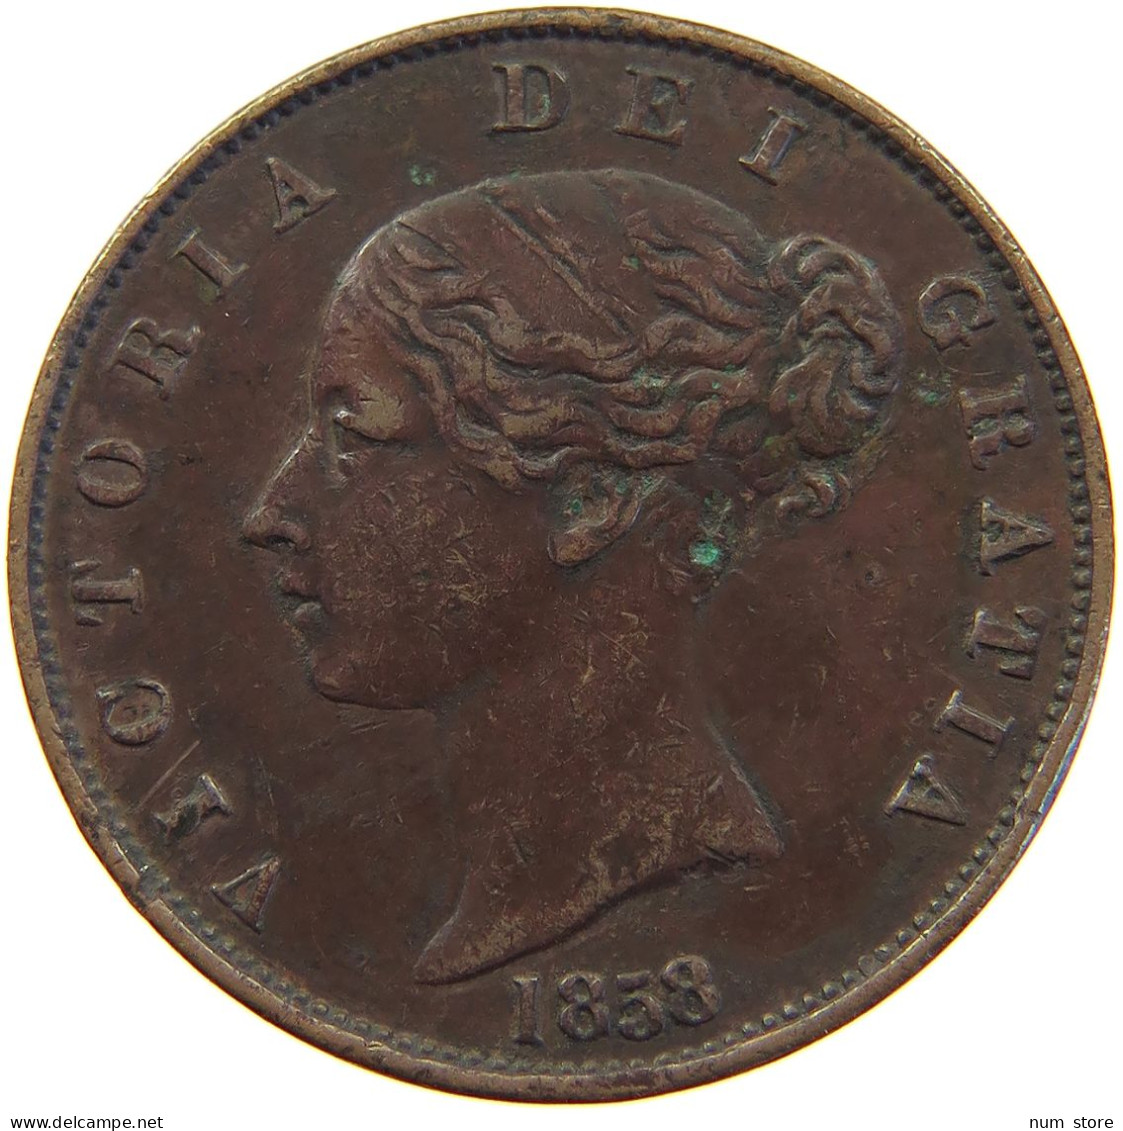 GREAT BRITAIN HALFPENNY 1858 Victoria 1837-1901 #s010 0255 - C. 1/2 Penny